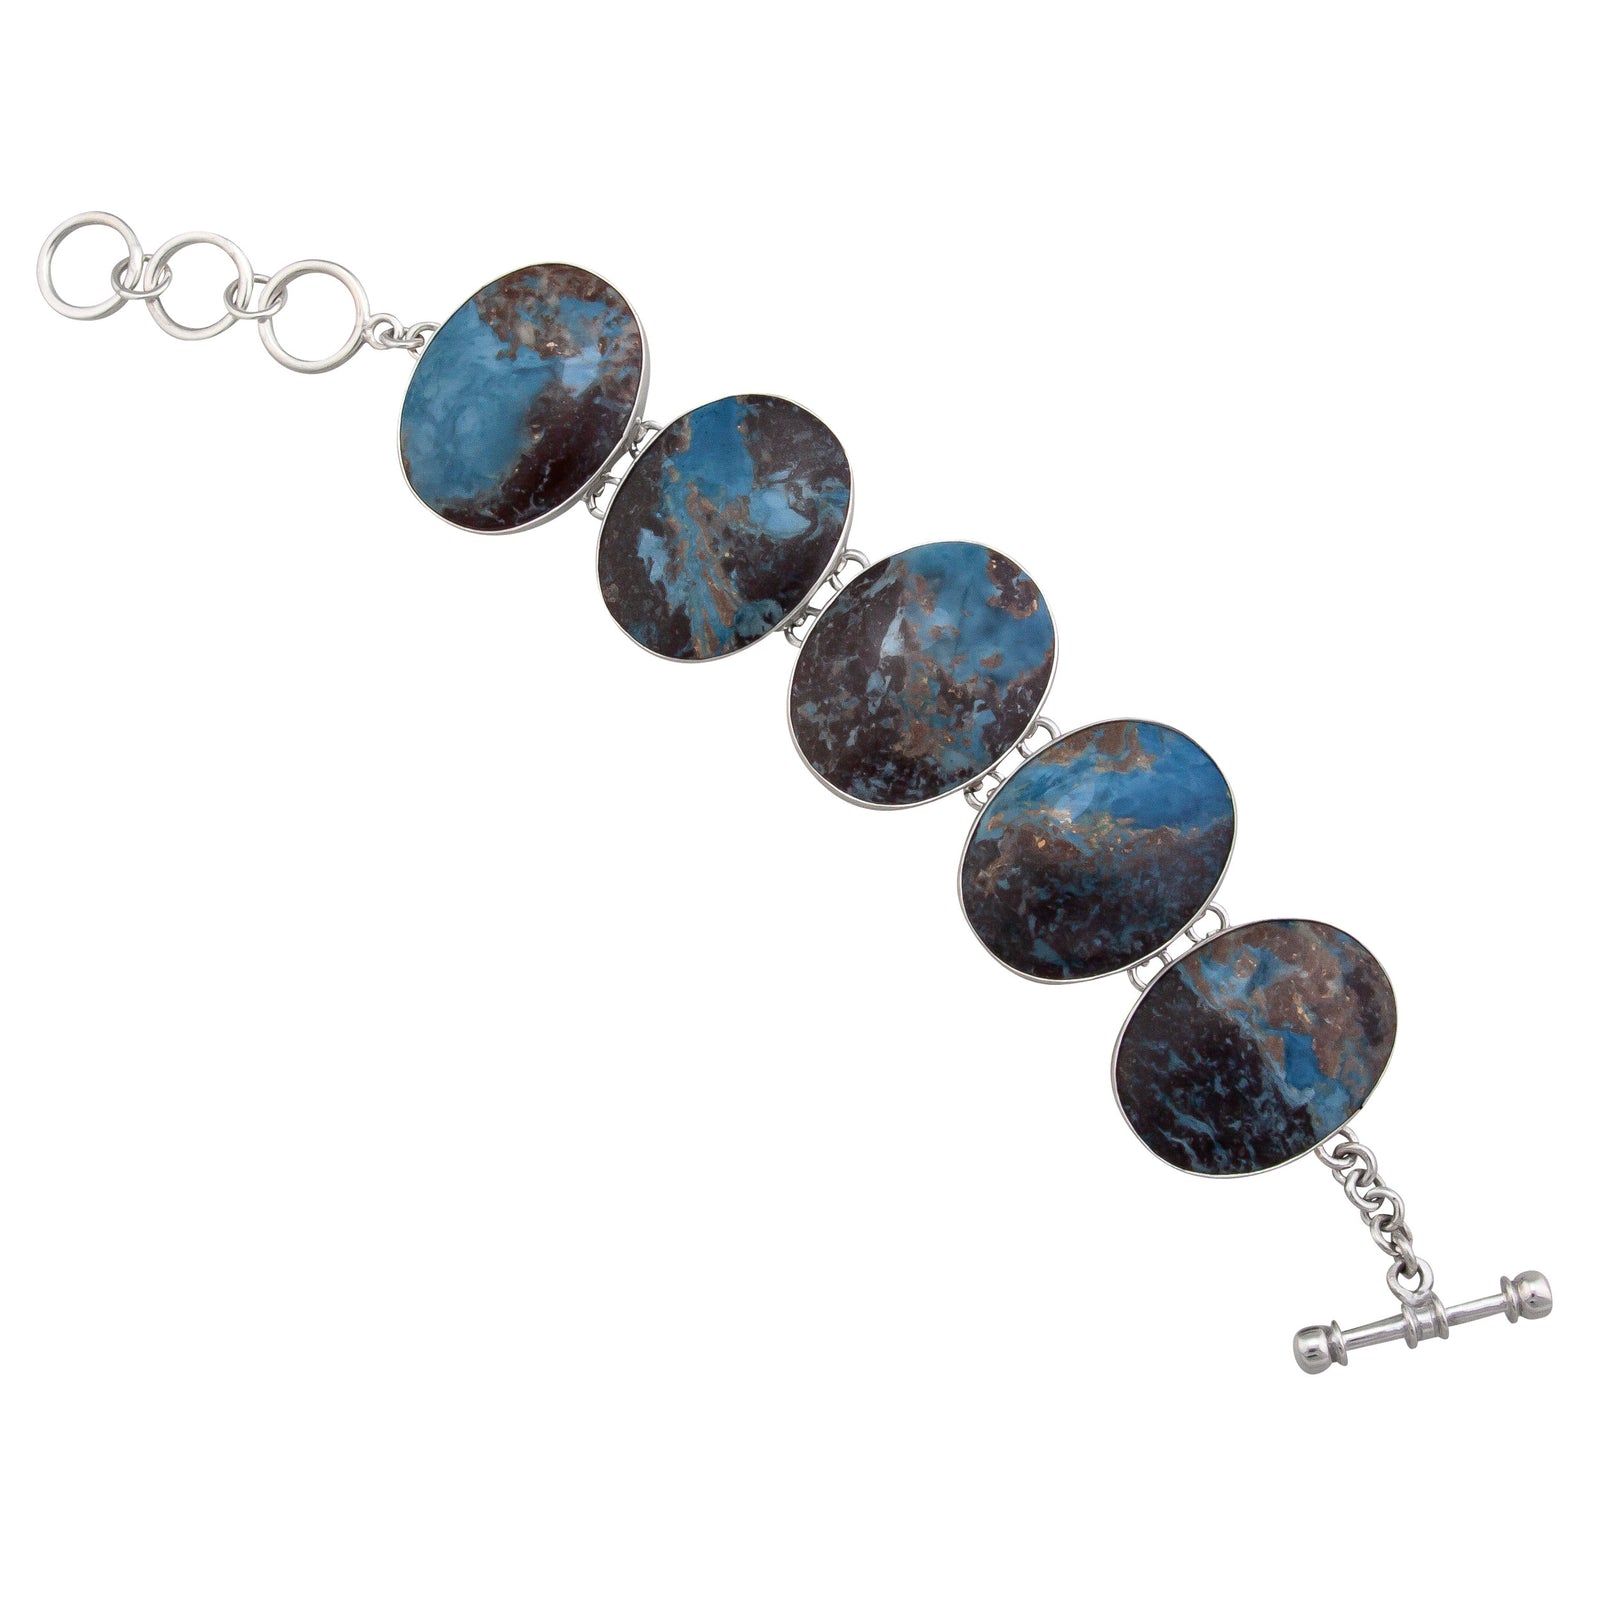 925 Solid Sterling Silver Bracelet Natural Lapis Lazuli at Rs 800/piece(s)  | लापीस लाजुली ब्रेसलेट in Ajmer | ID: 12620756133